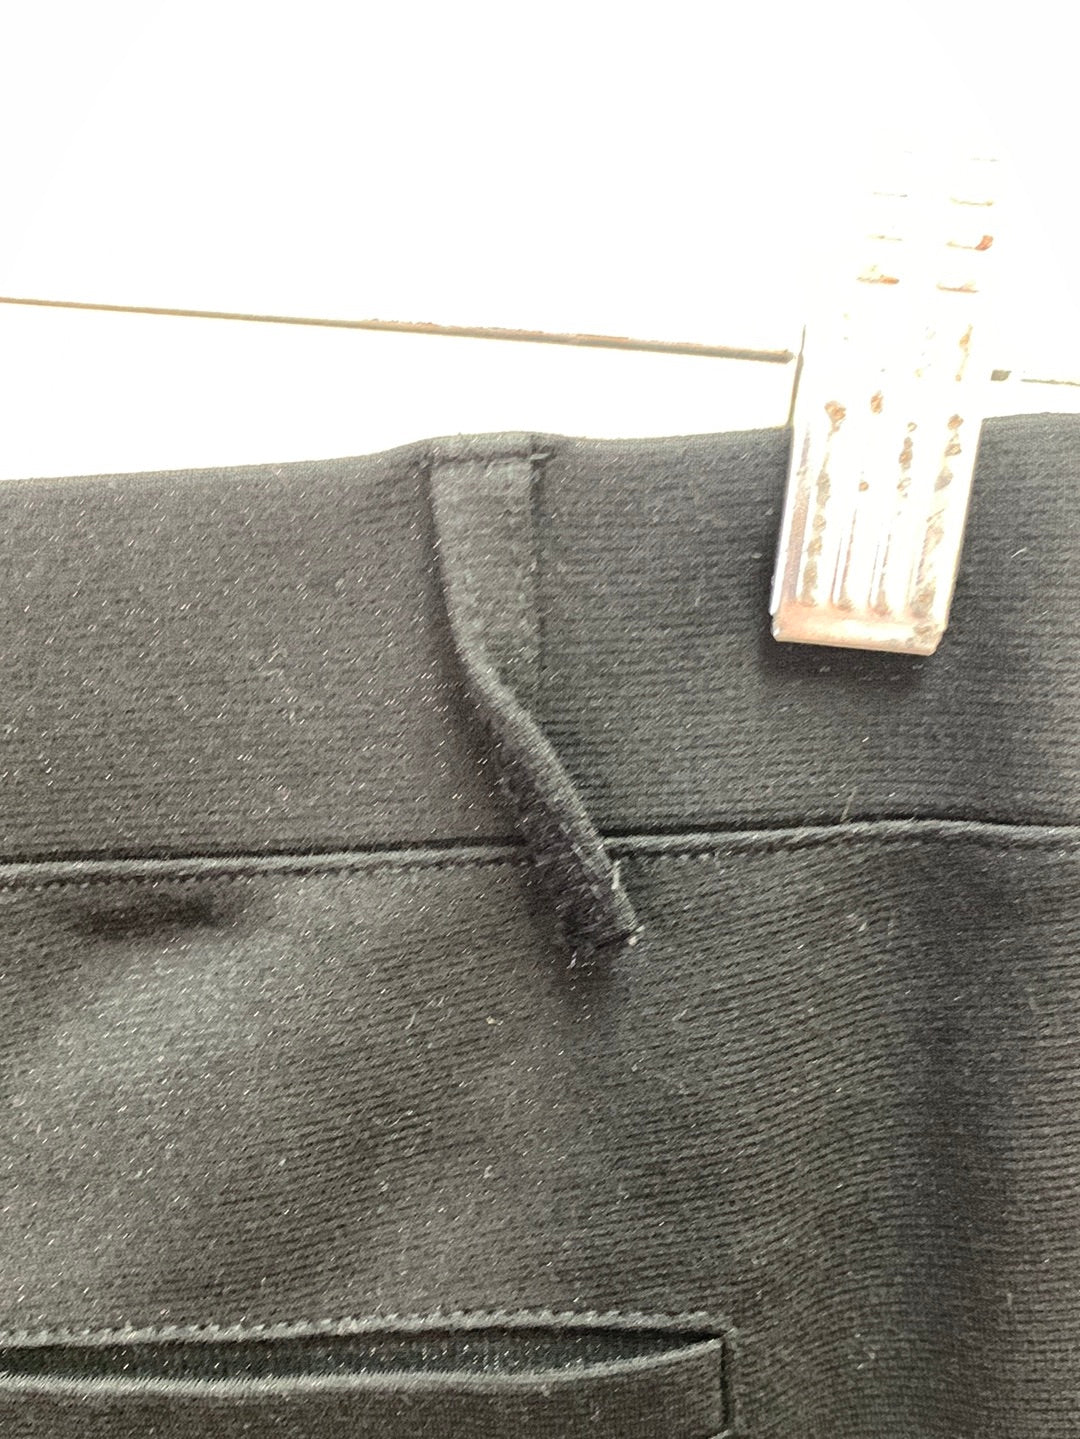 BETABRAND black shimmer Classic Bootcut Dress Yoga Pants - PM –  CommunityWorx Thrift Online